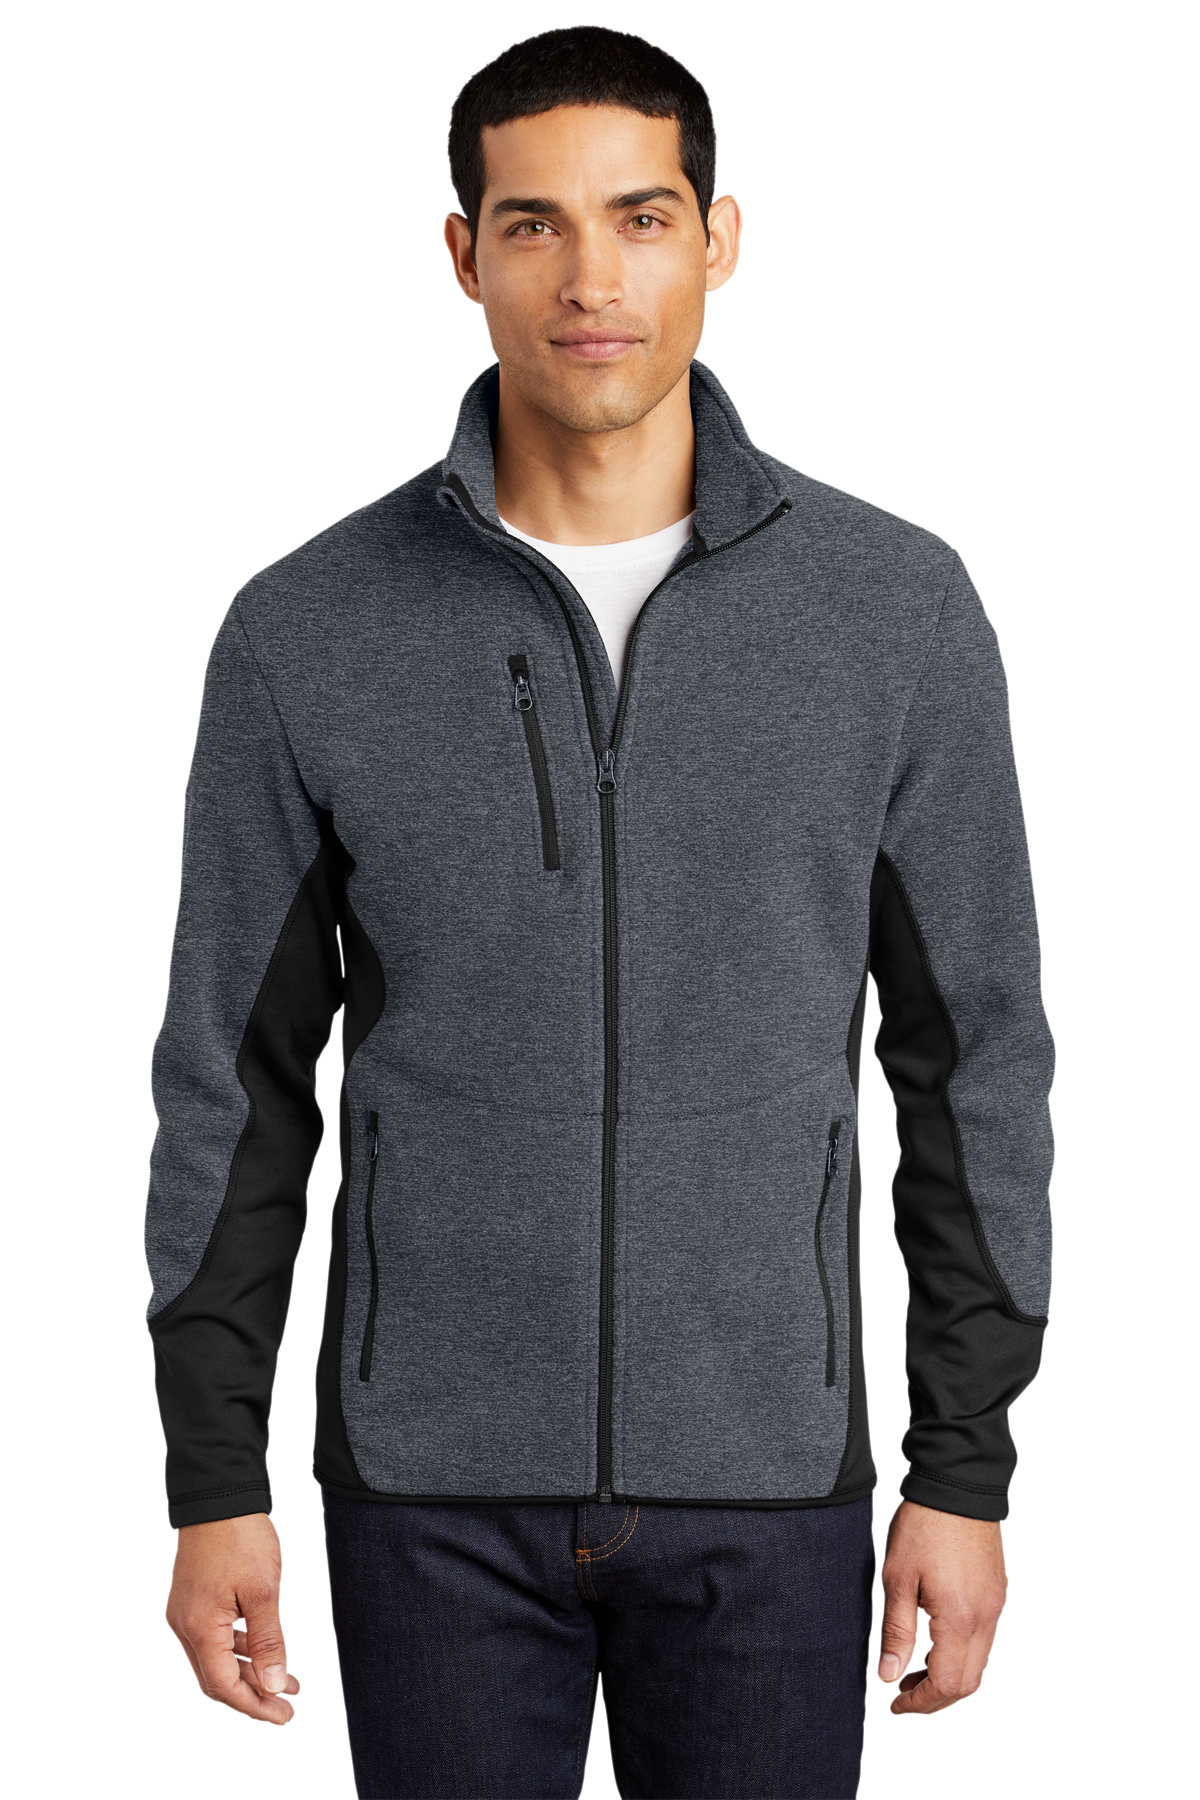 Port Authority R-Tek Pro Fleece Full-Zip Jacket | Product | Port Authority